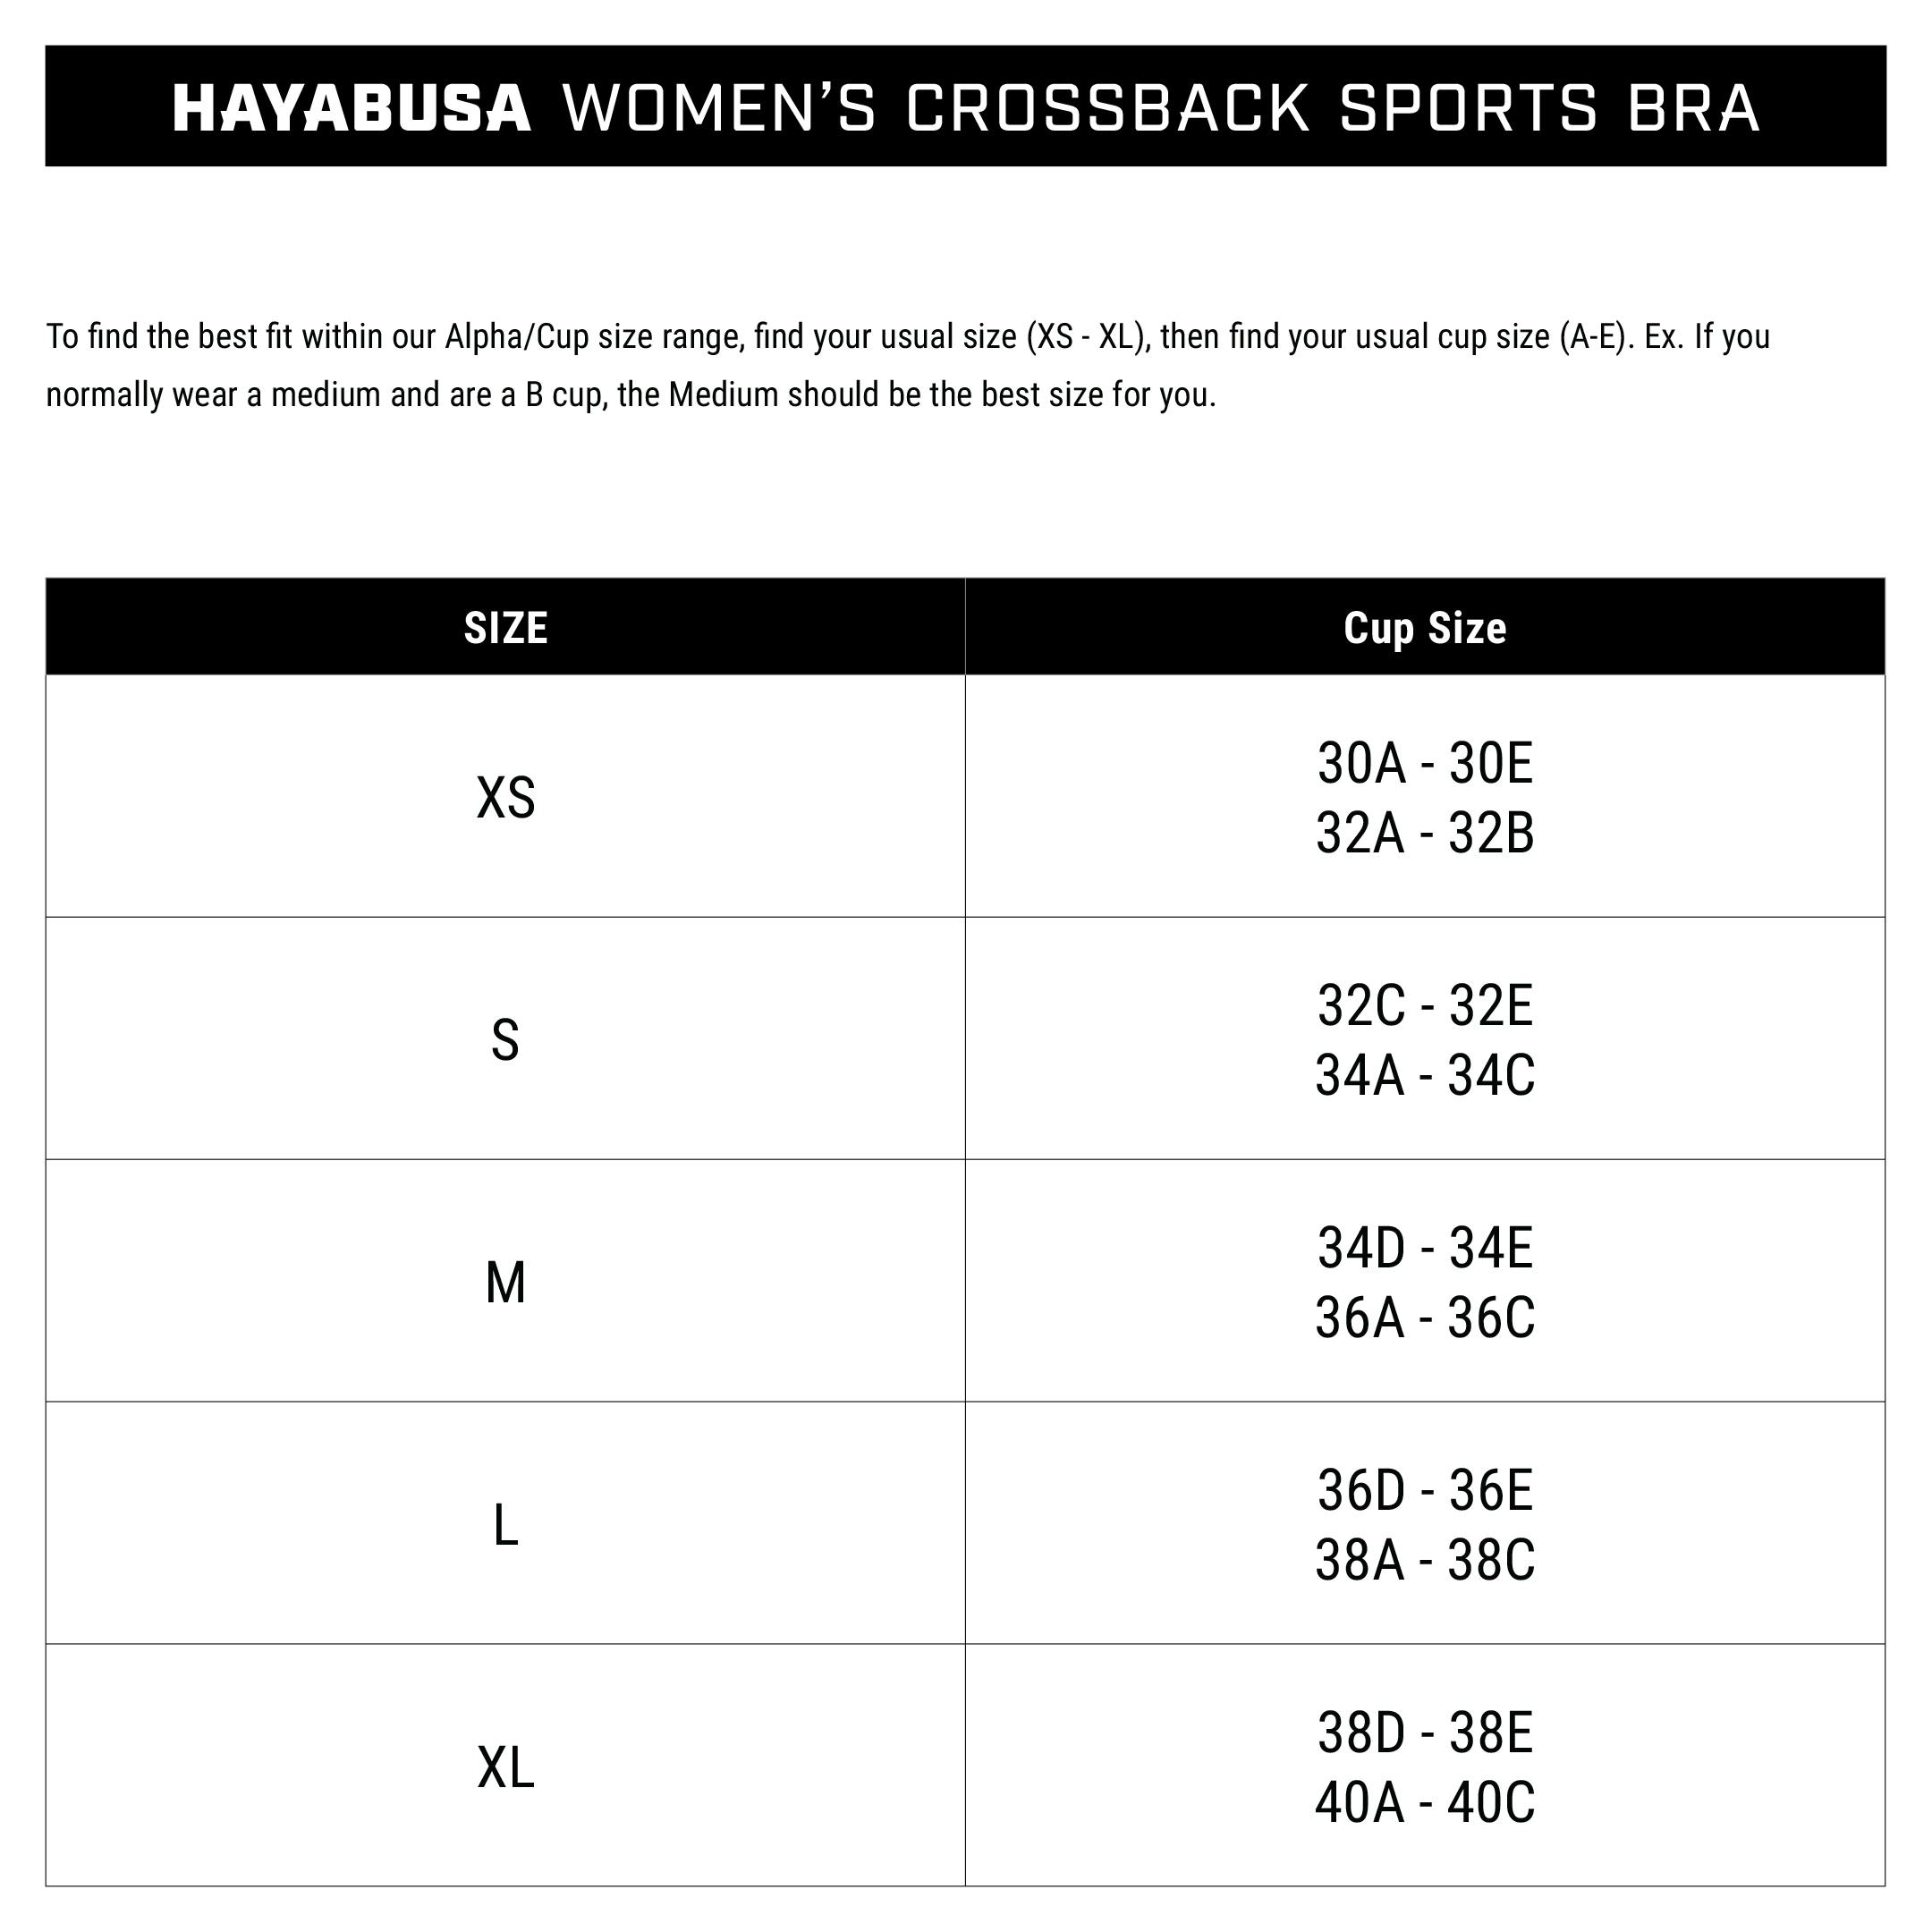 Hayabusa Women’s Crossback Sports Bra